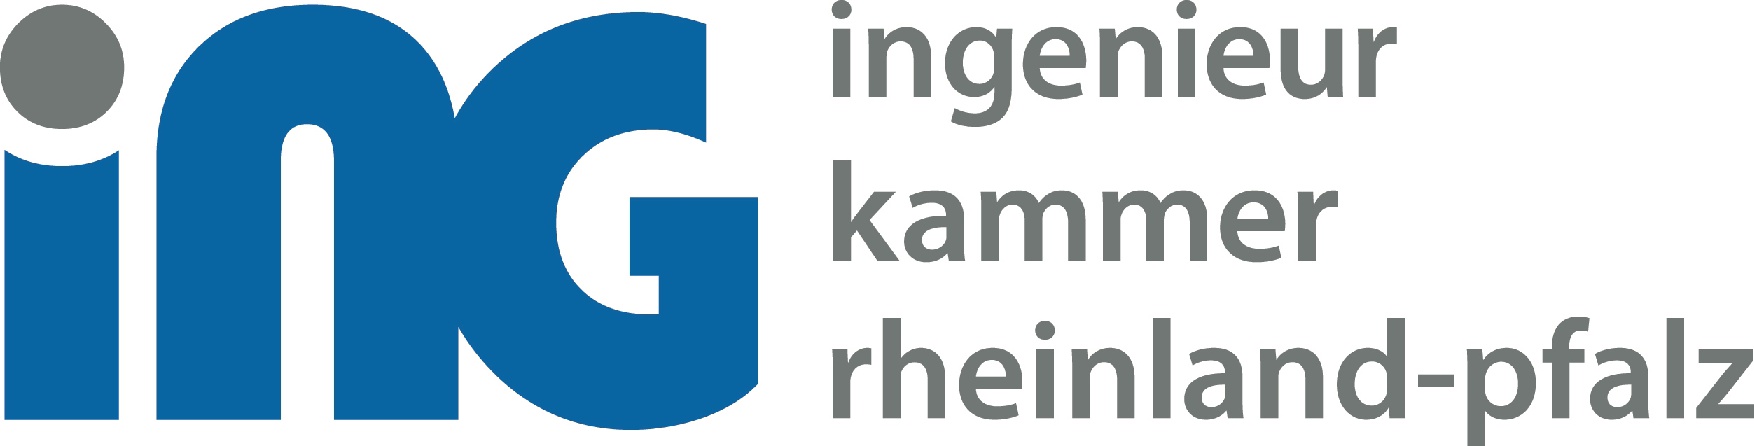 Logo_Ingenieurkammer-Rheinland-Pfalz.neu2009 \x281\x29.jpg